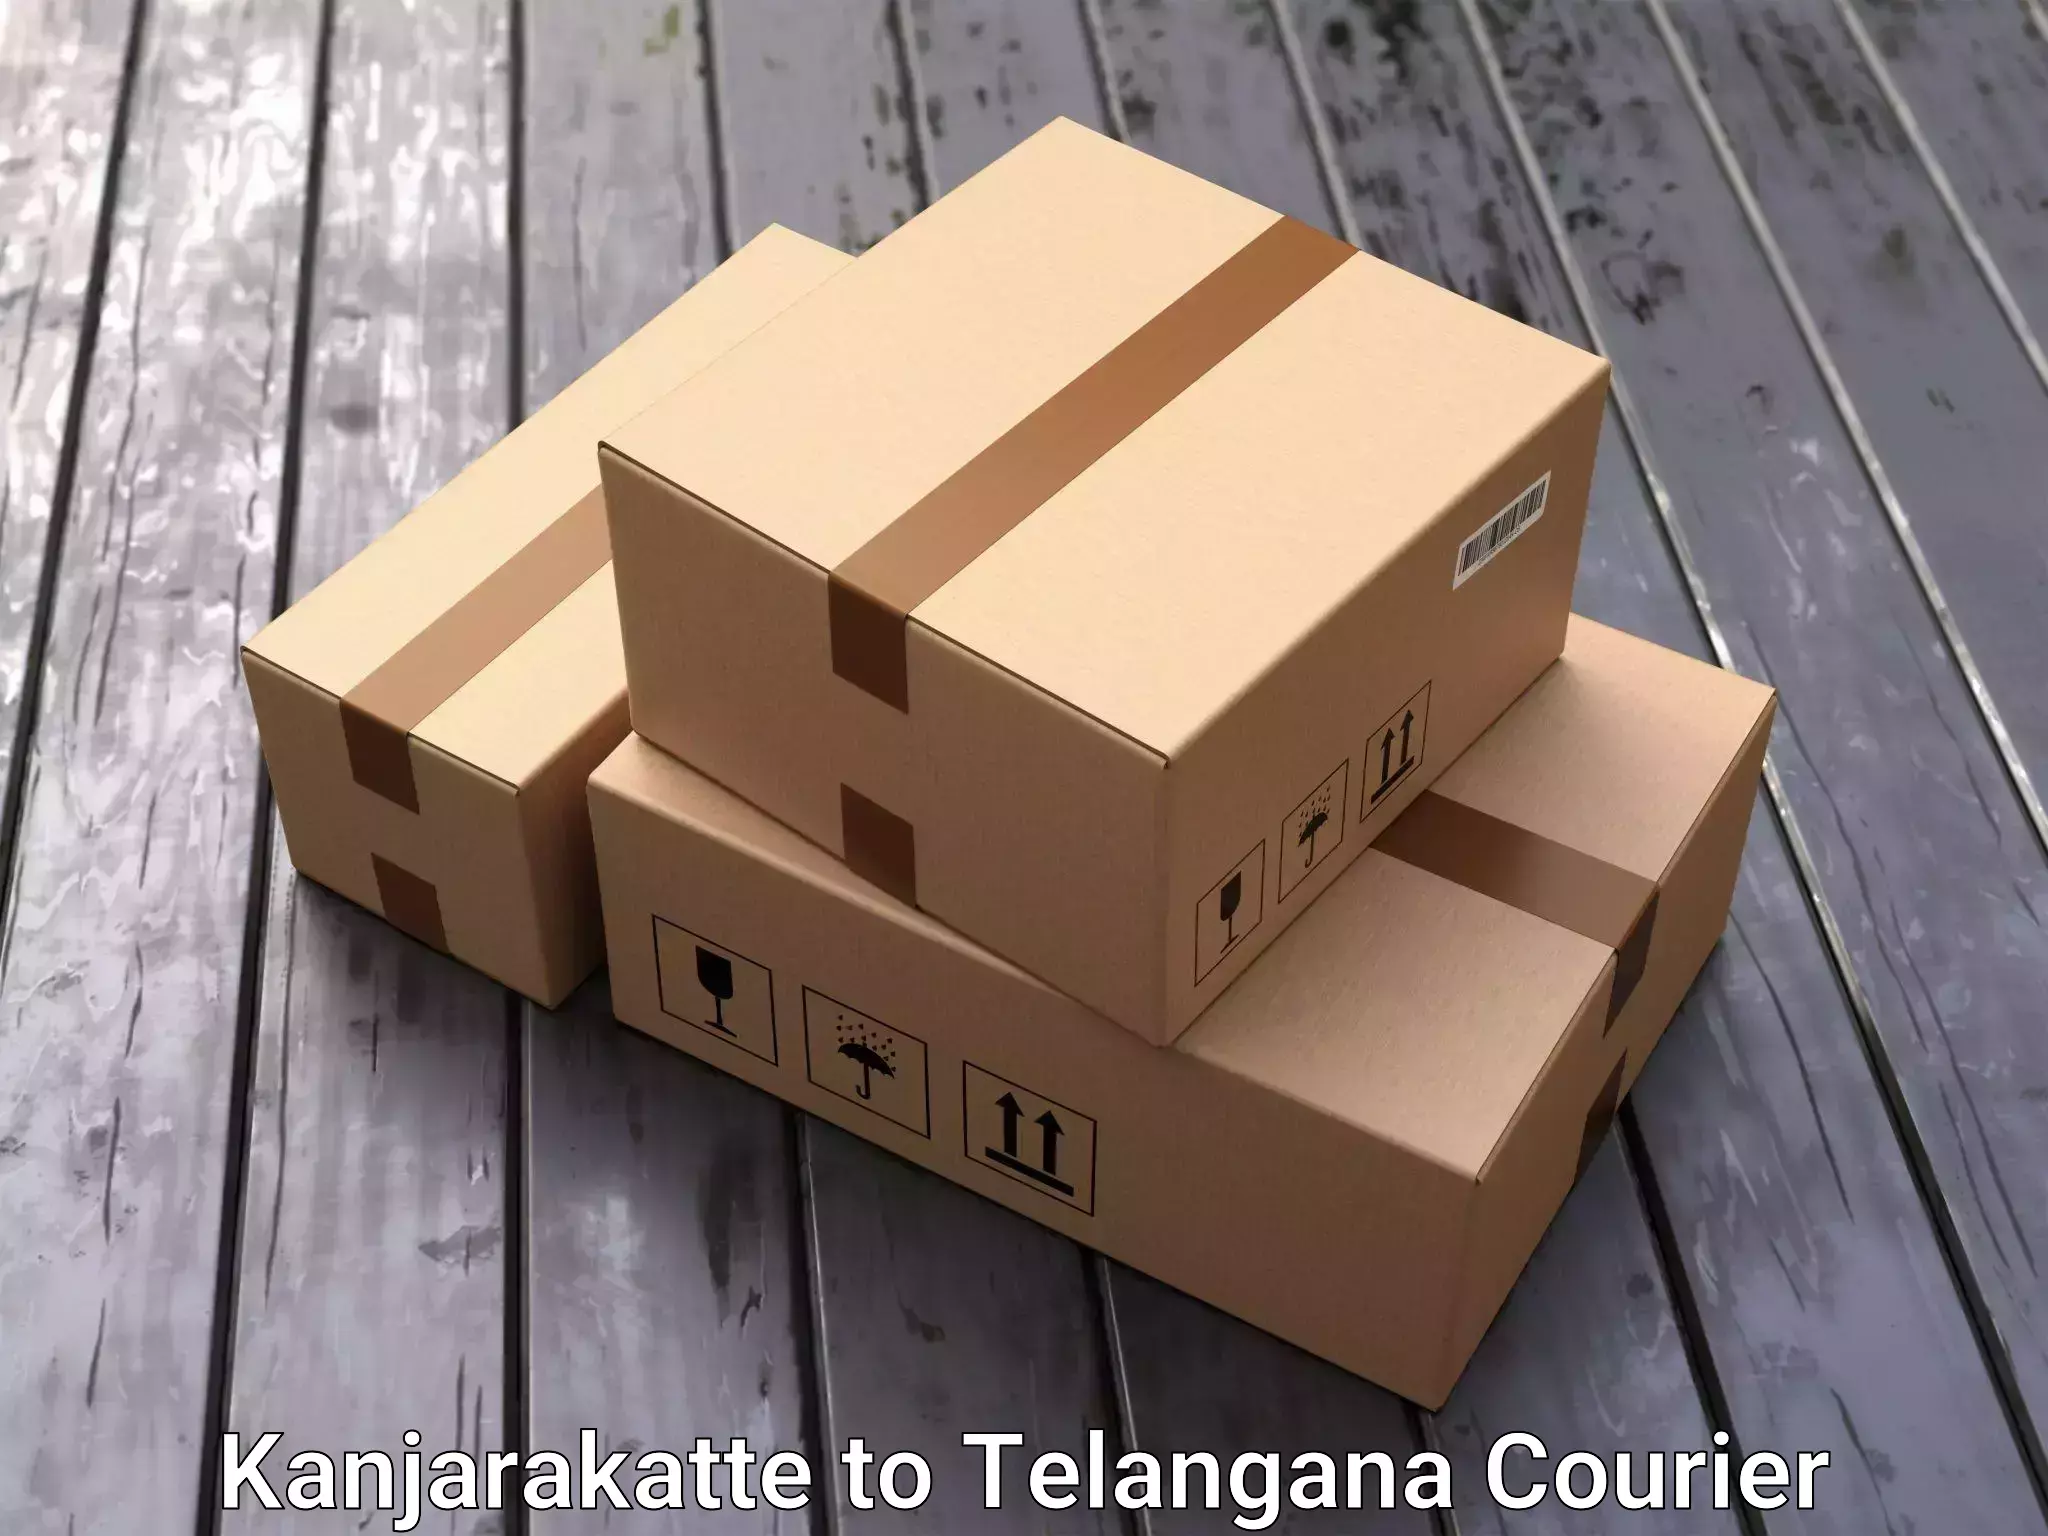 Professional movers and packers Kanjarakatte to Gangadhara